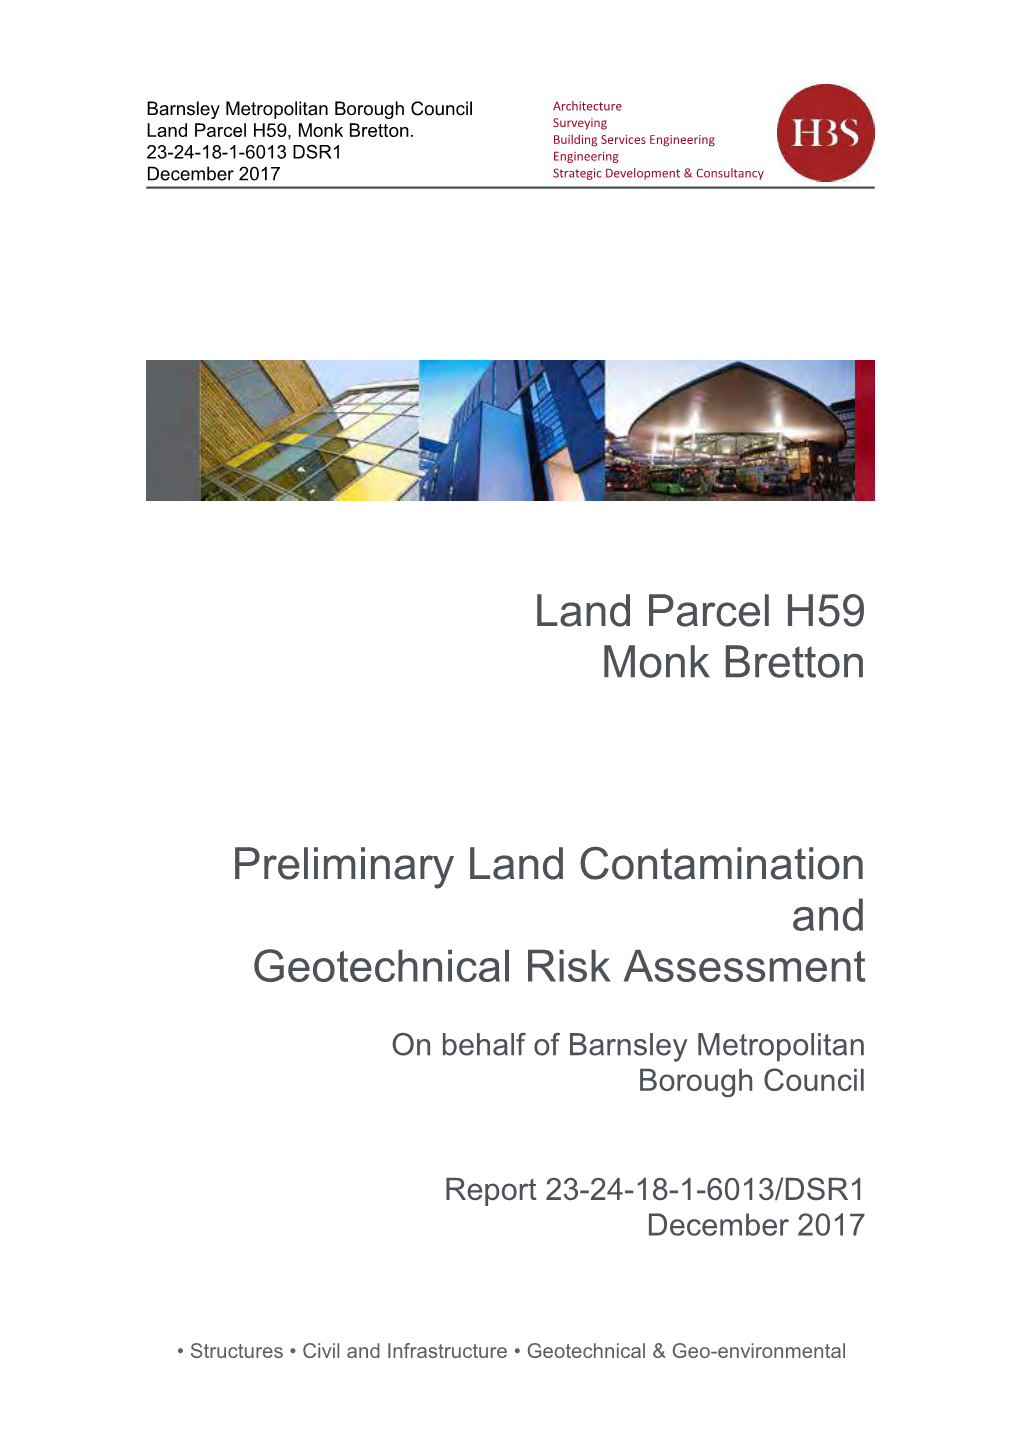 Land Parcel H59 Monk Bretton Preliminary Land Contamination And